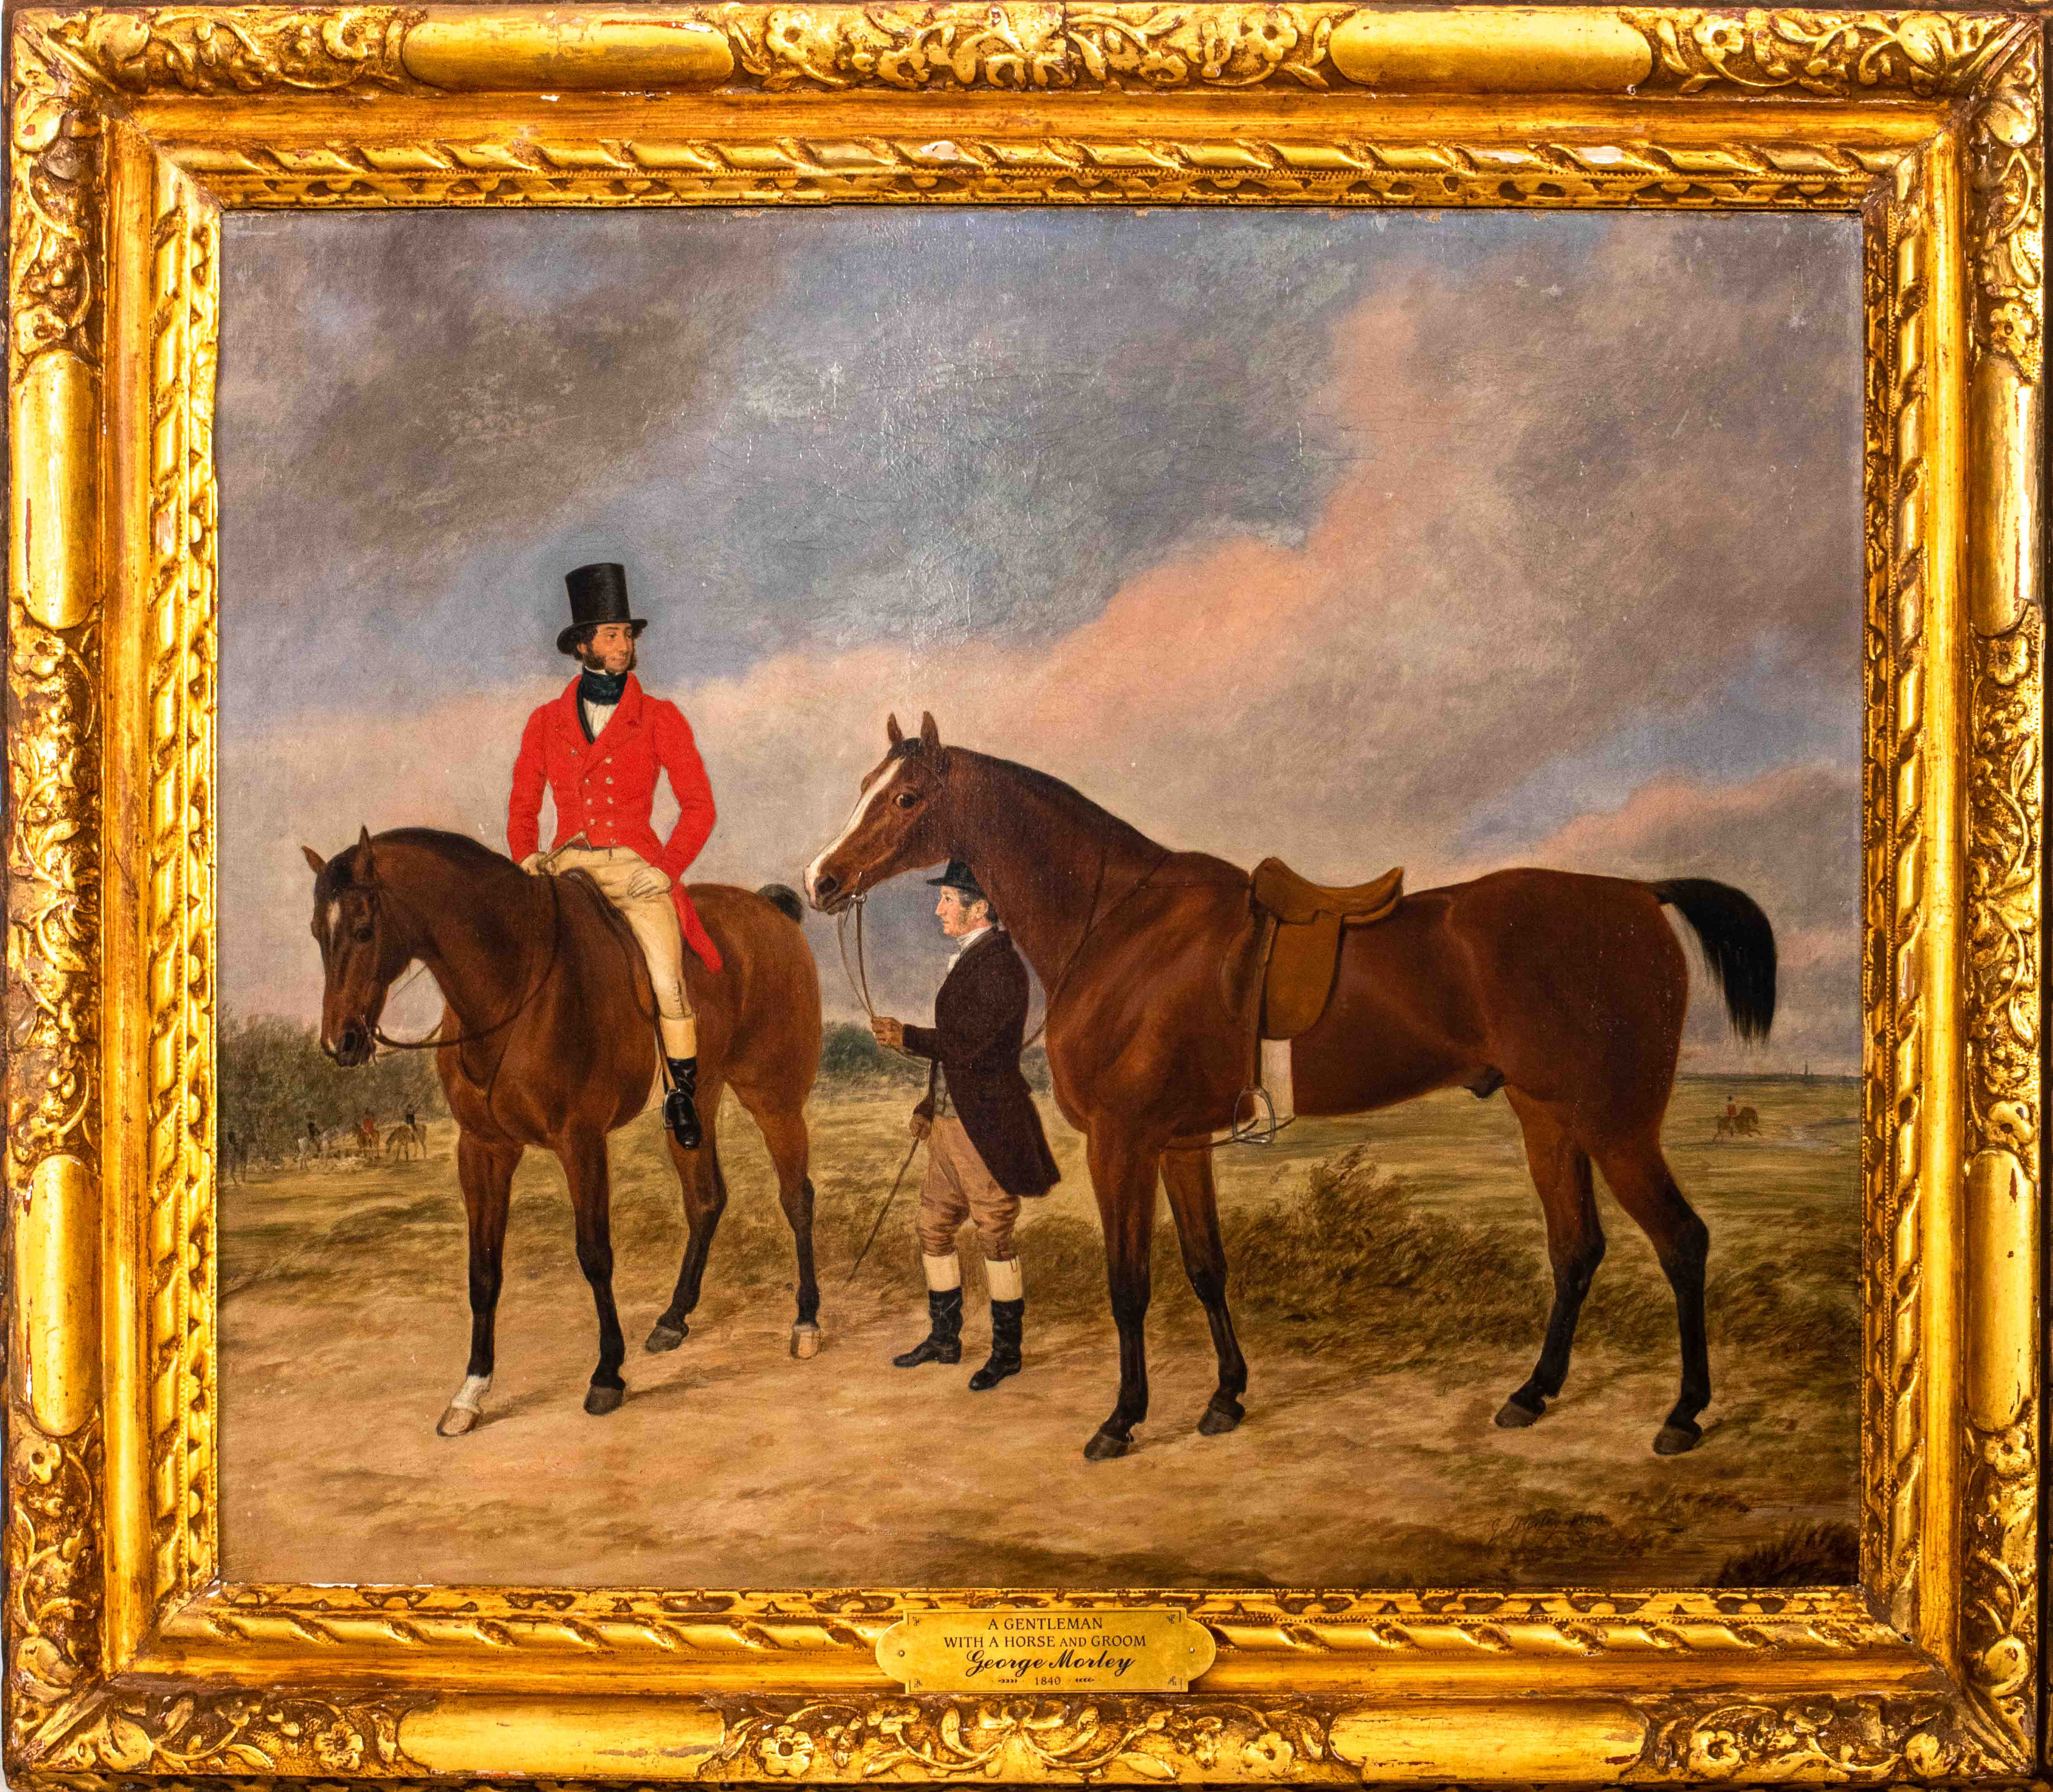 GEORGE MORLEY "GENTLEMAN WITH HORSE